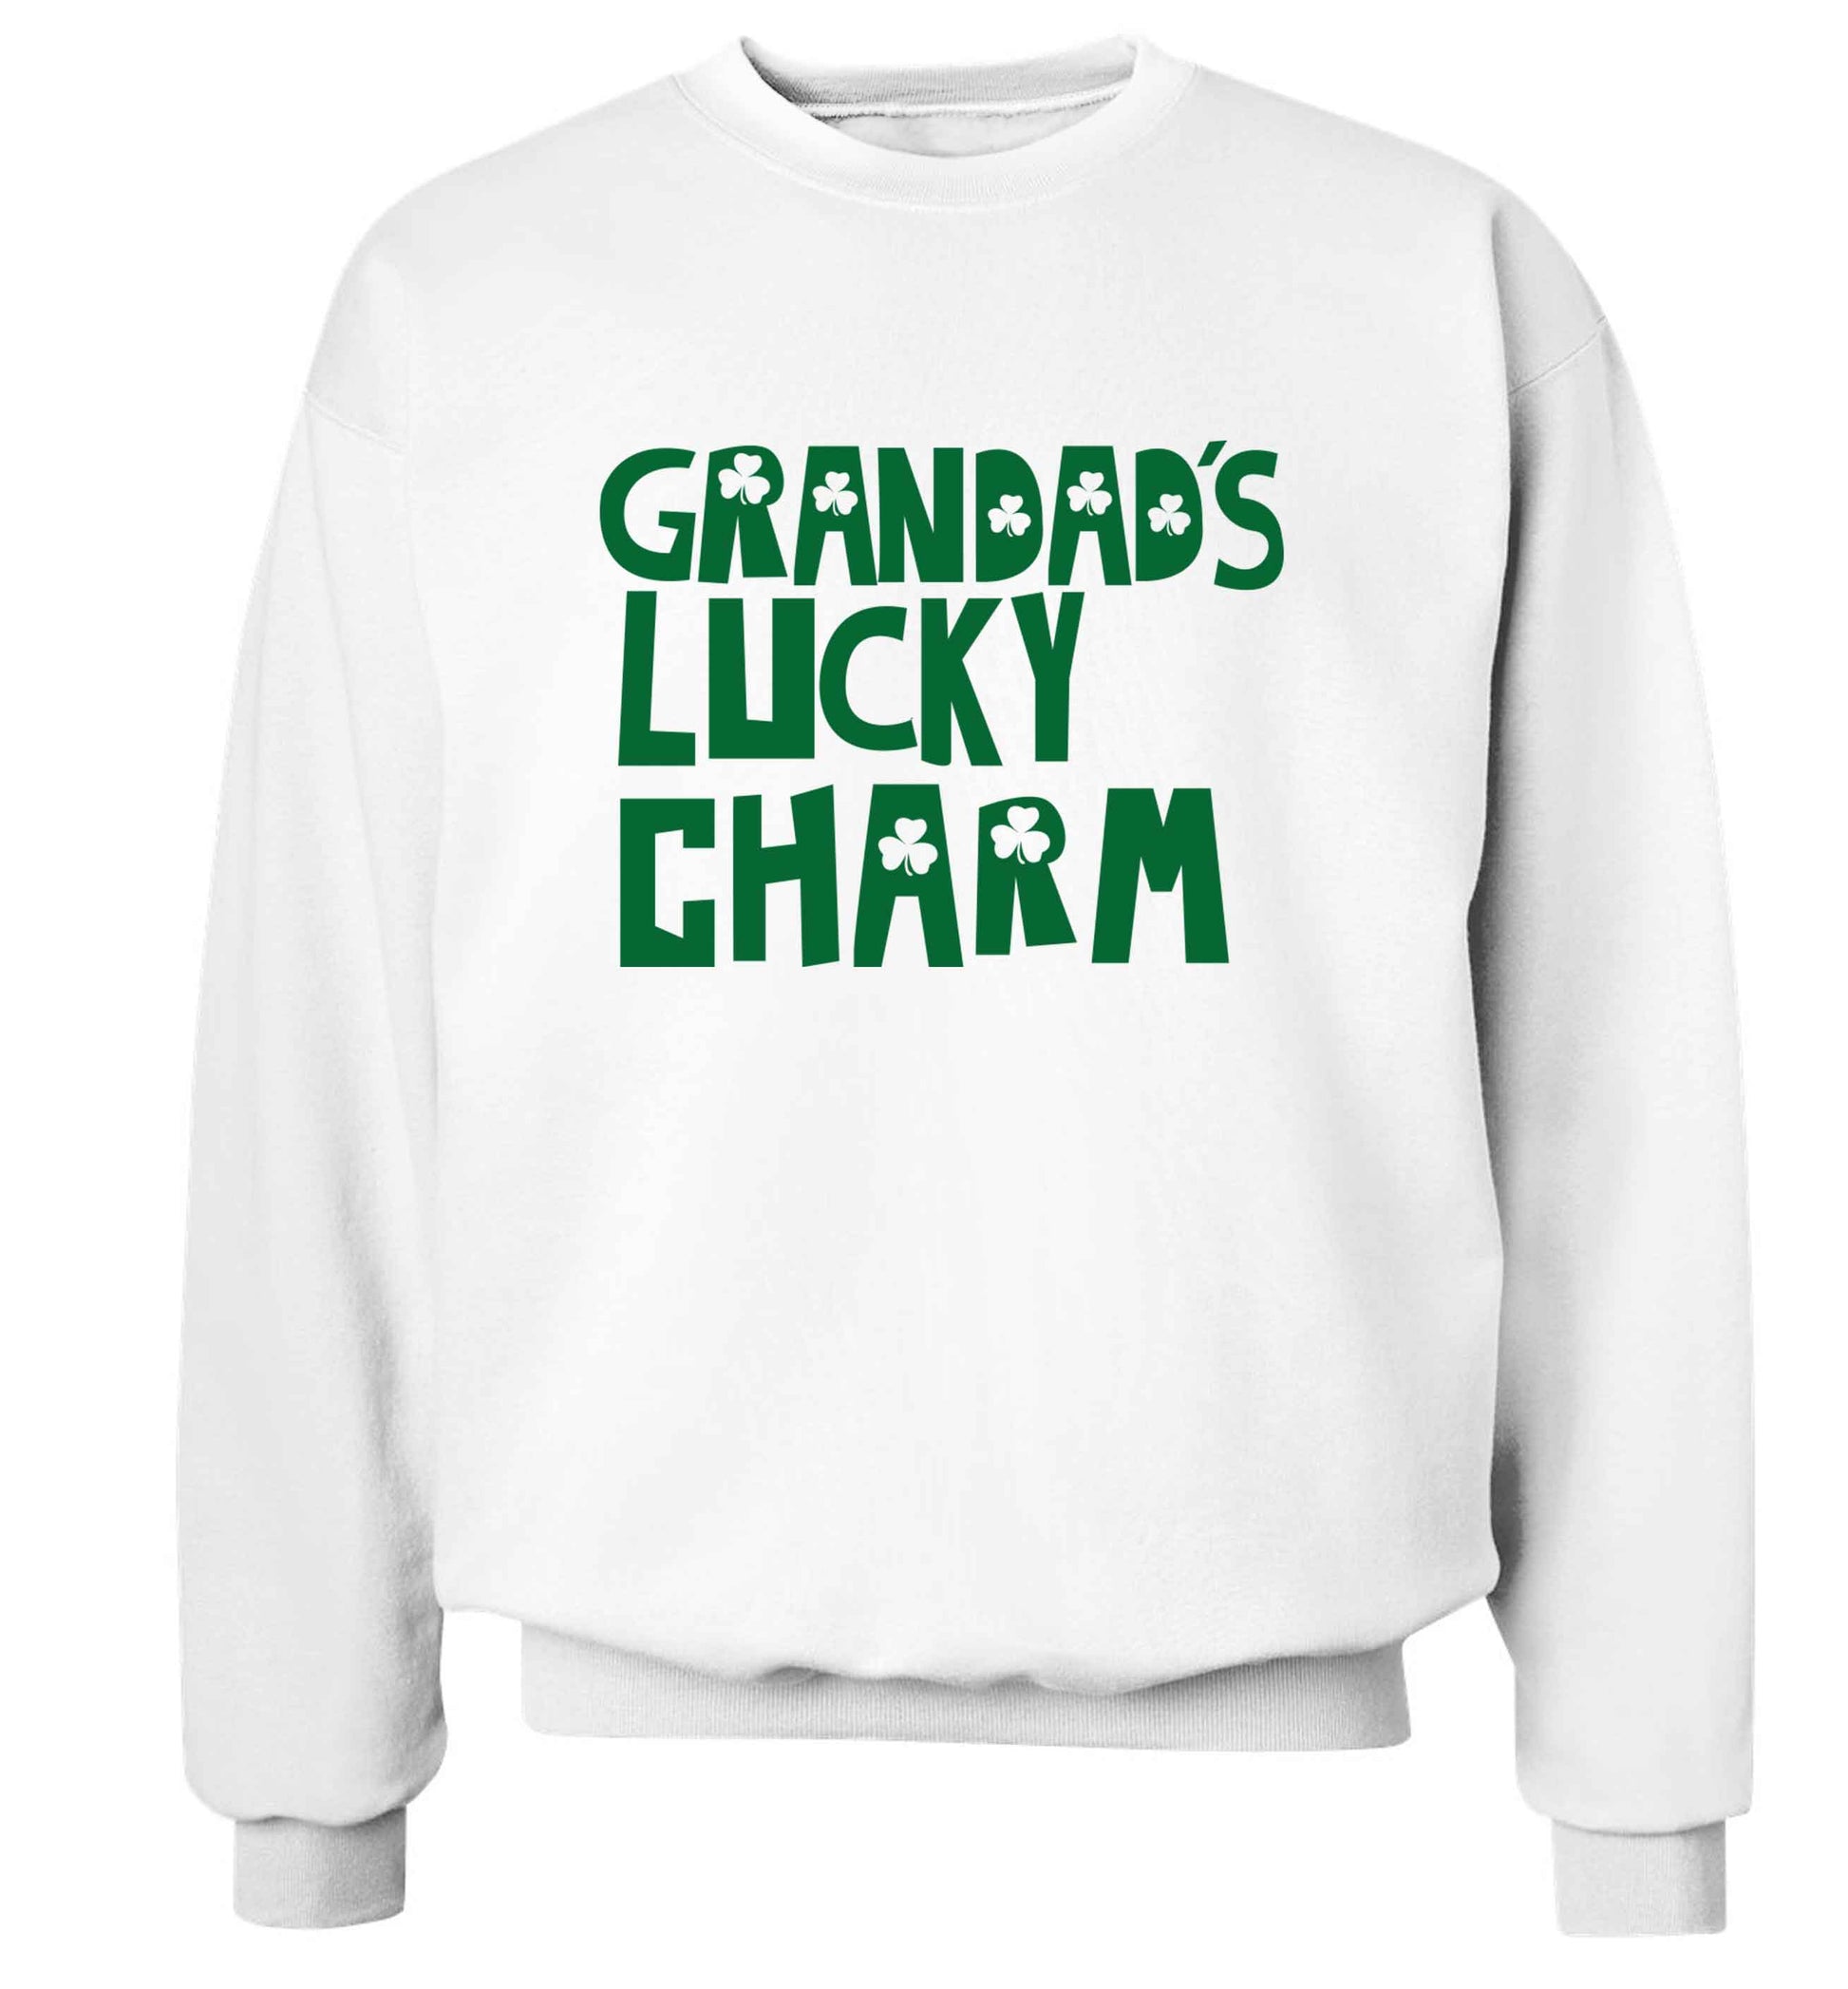 Grandad's lucky charm  adult's unisex white sweater 2XL